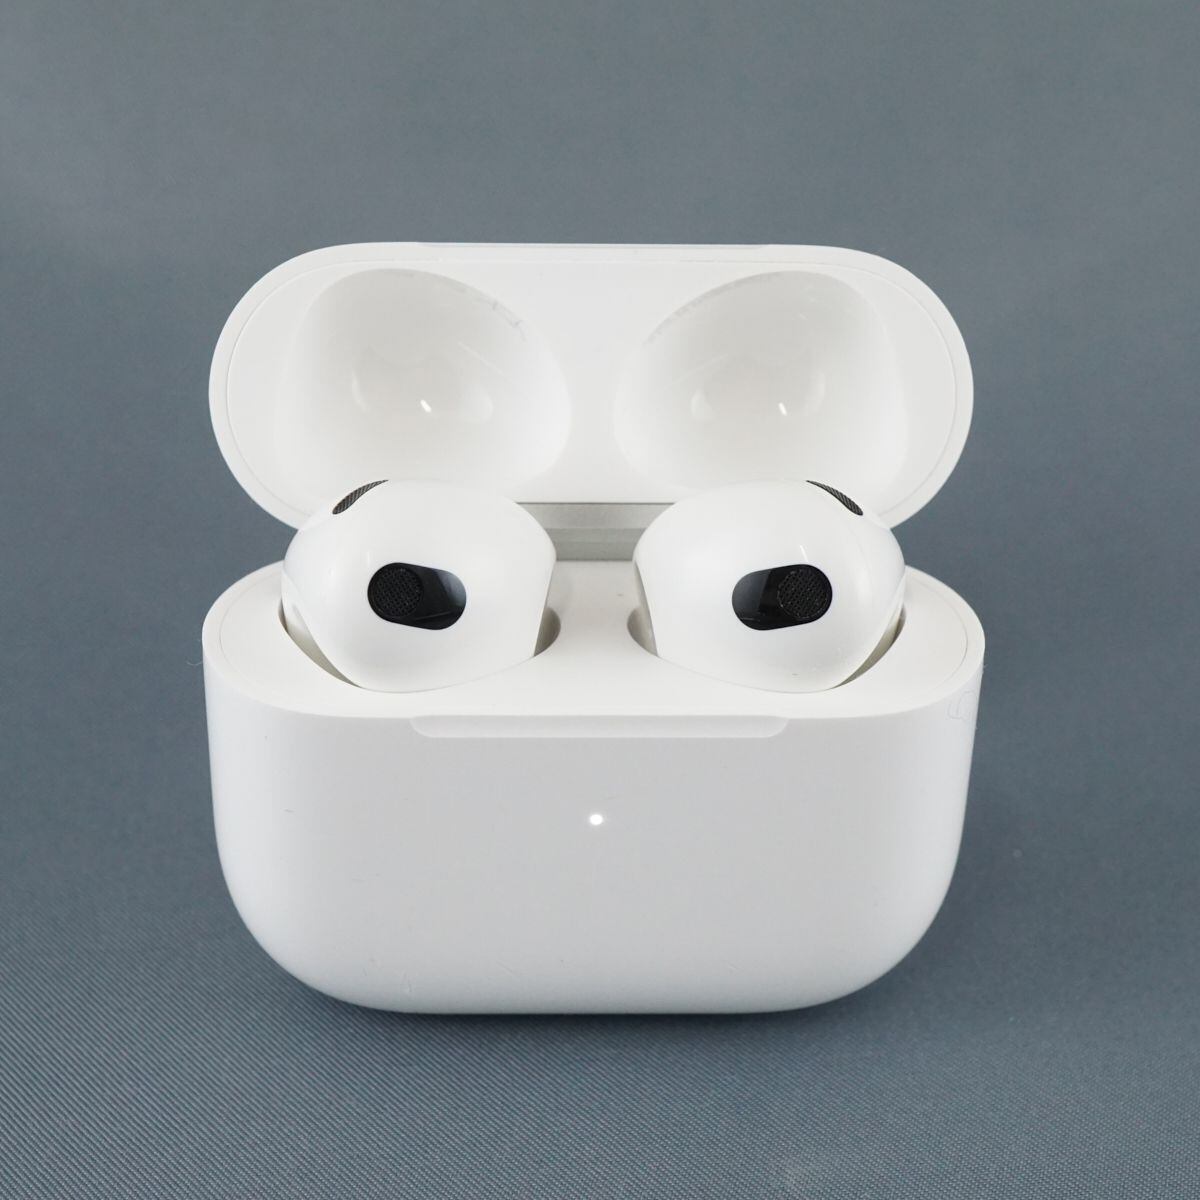 Apple AirPods 第三世代 MagSafe充電ケース付 USED美品